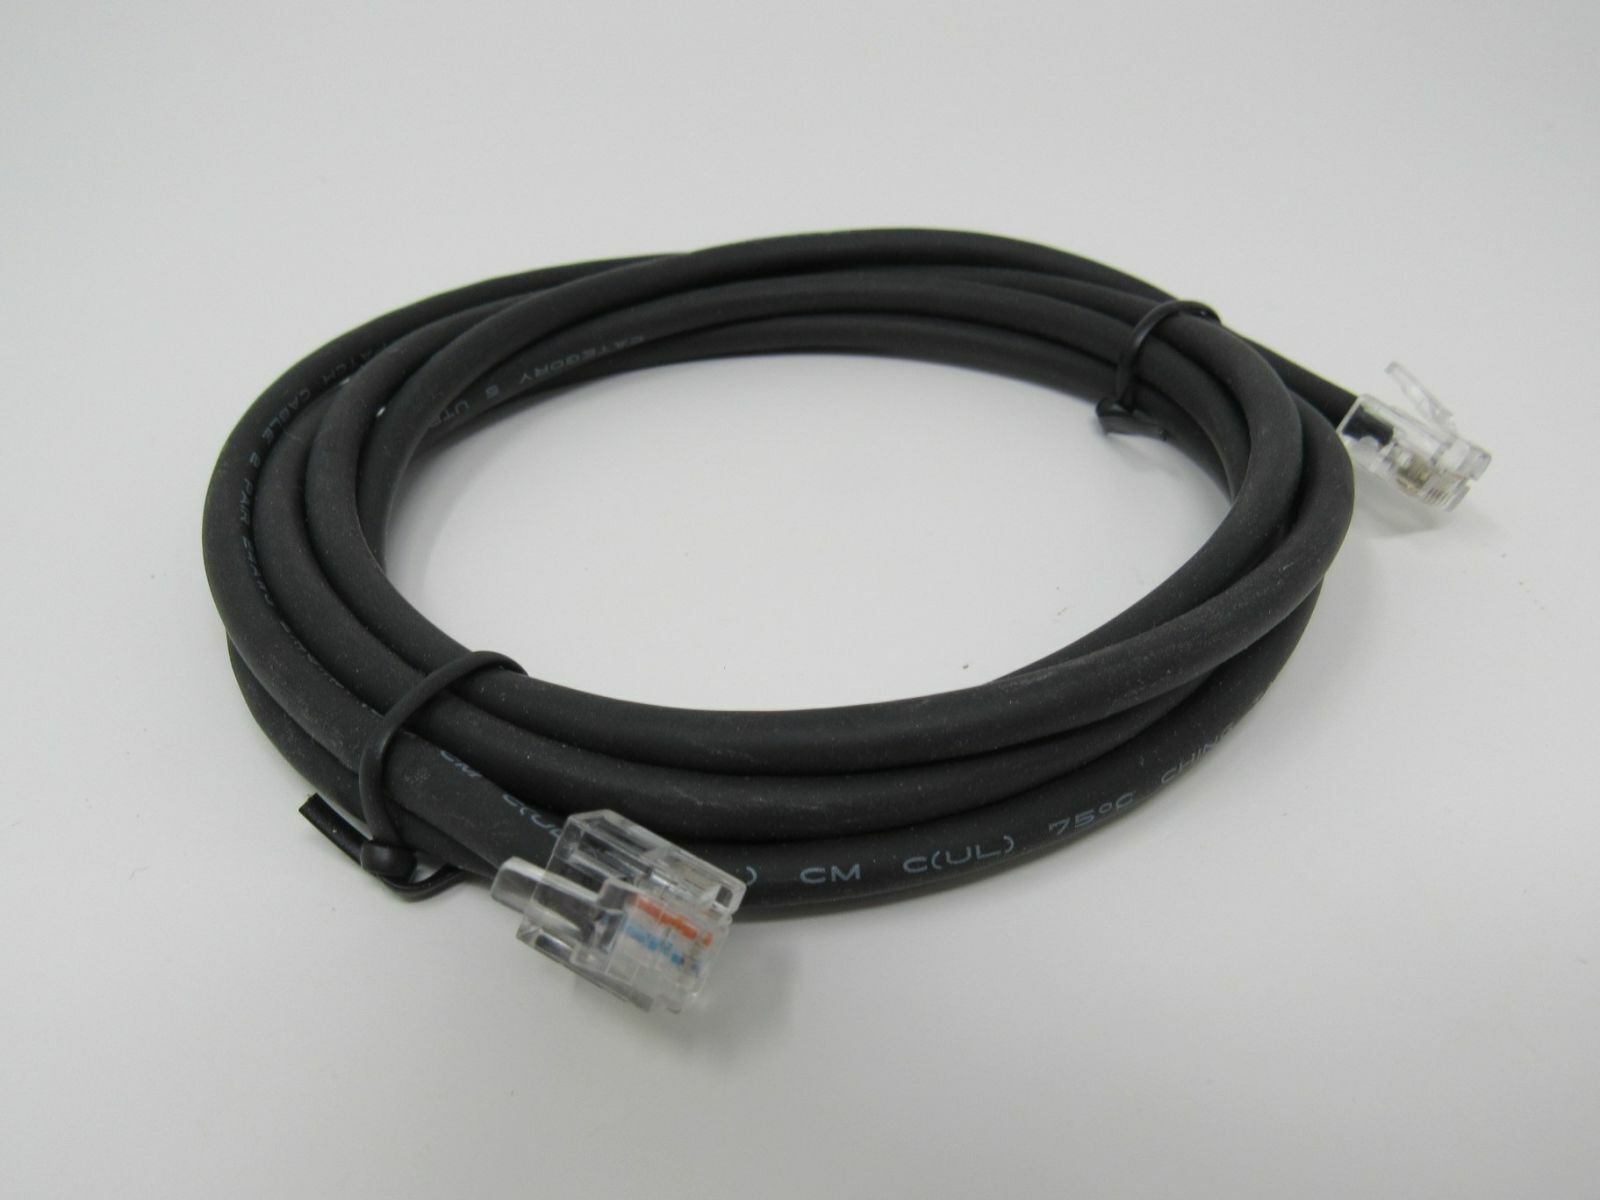 Standard Ethernet Patch Cable RJ-45 6 ft Cat5e